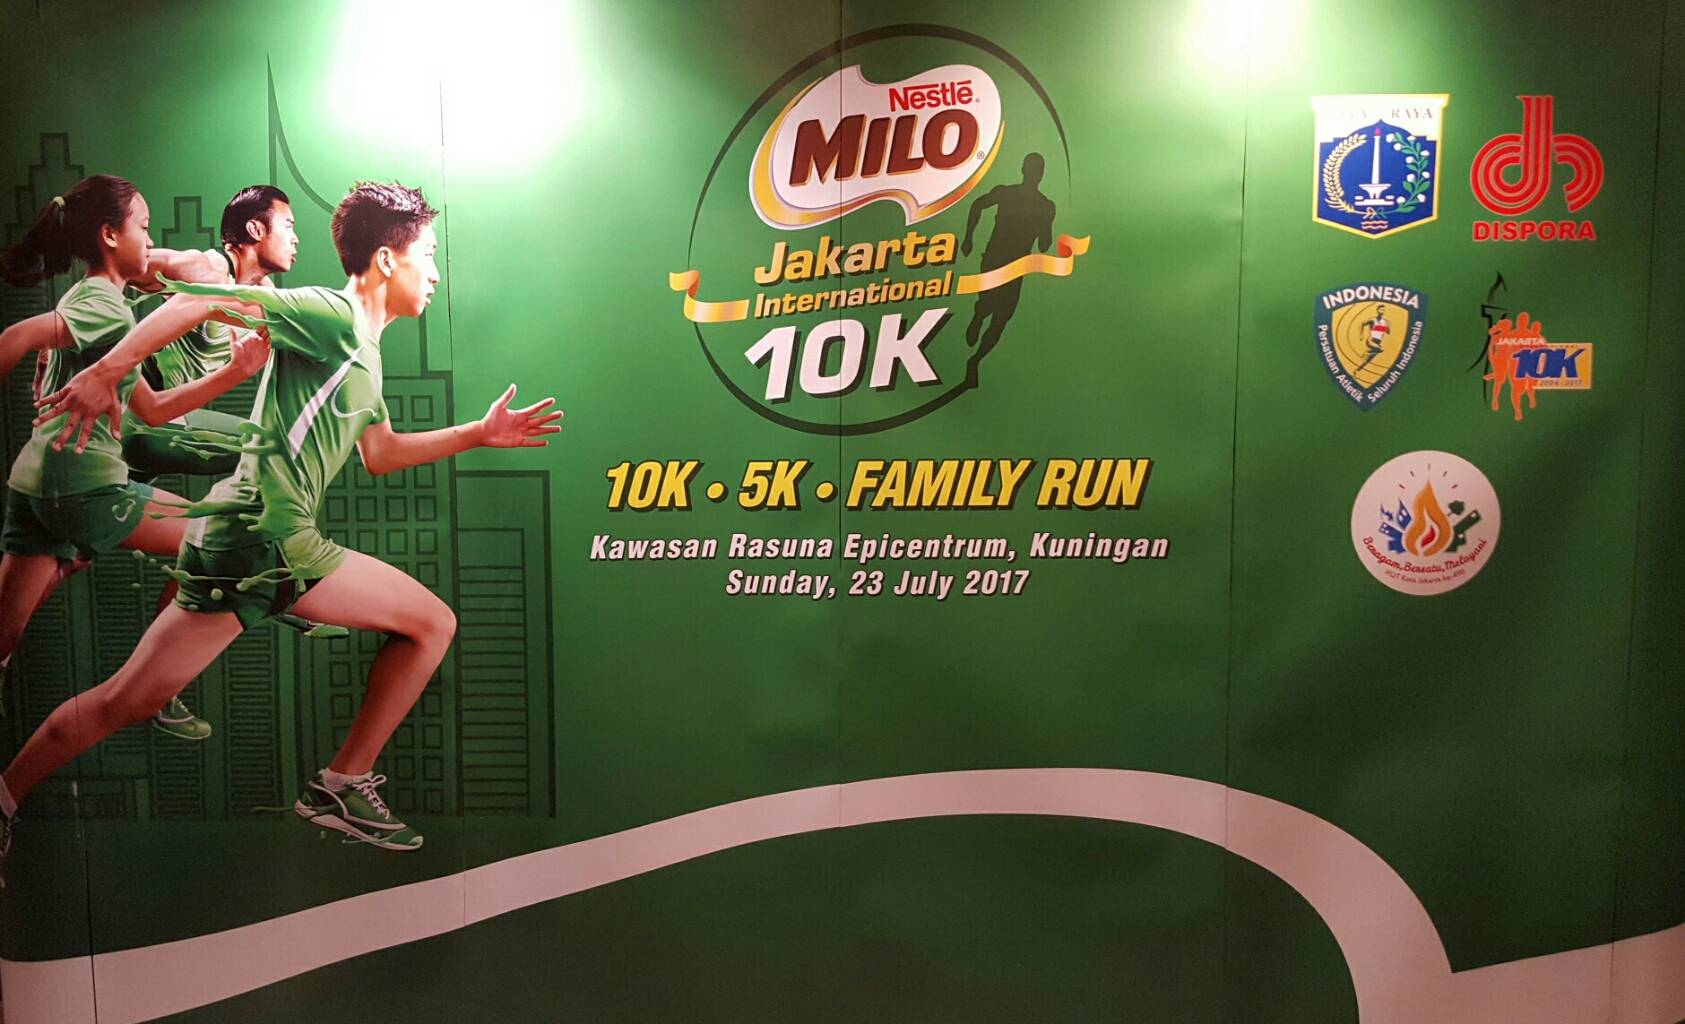 Yuk, Lari Bersama Keluarga di MILO 10K